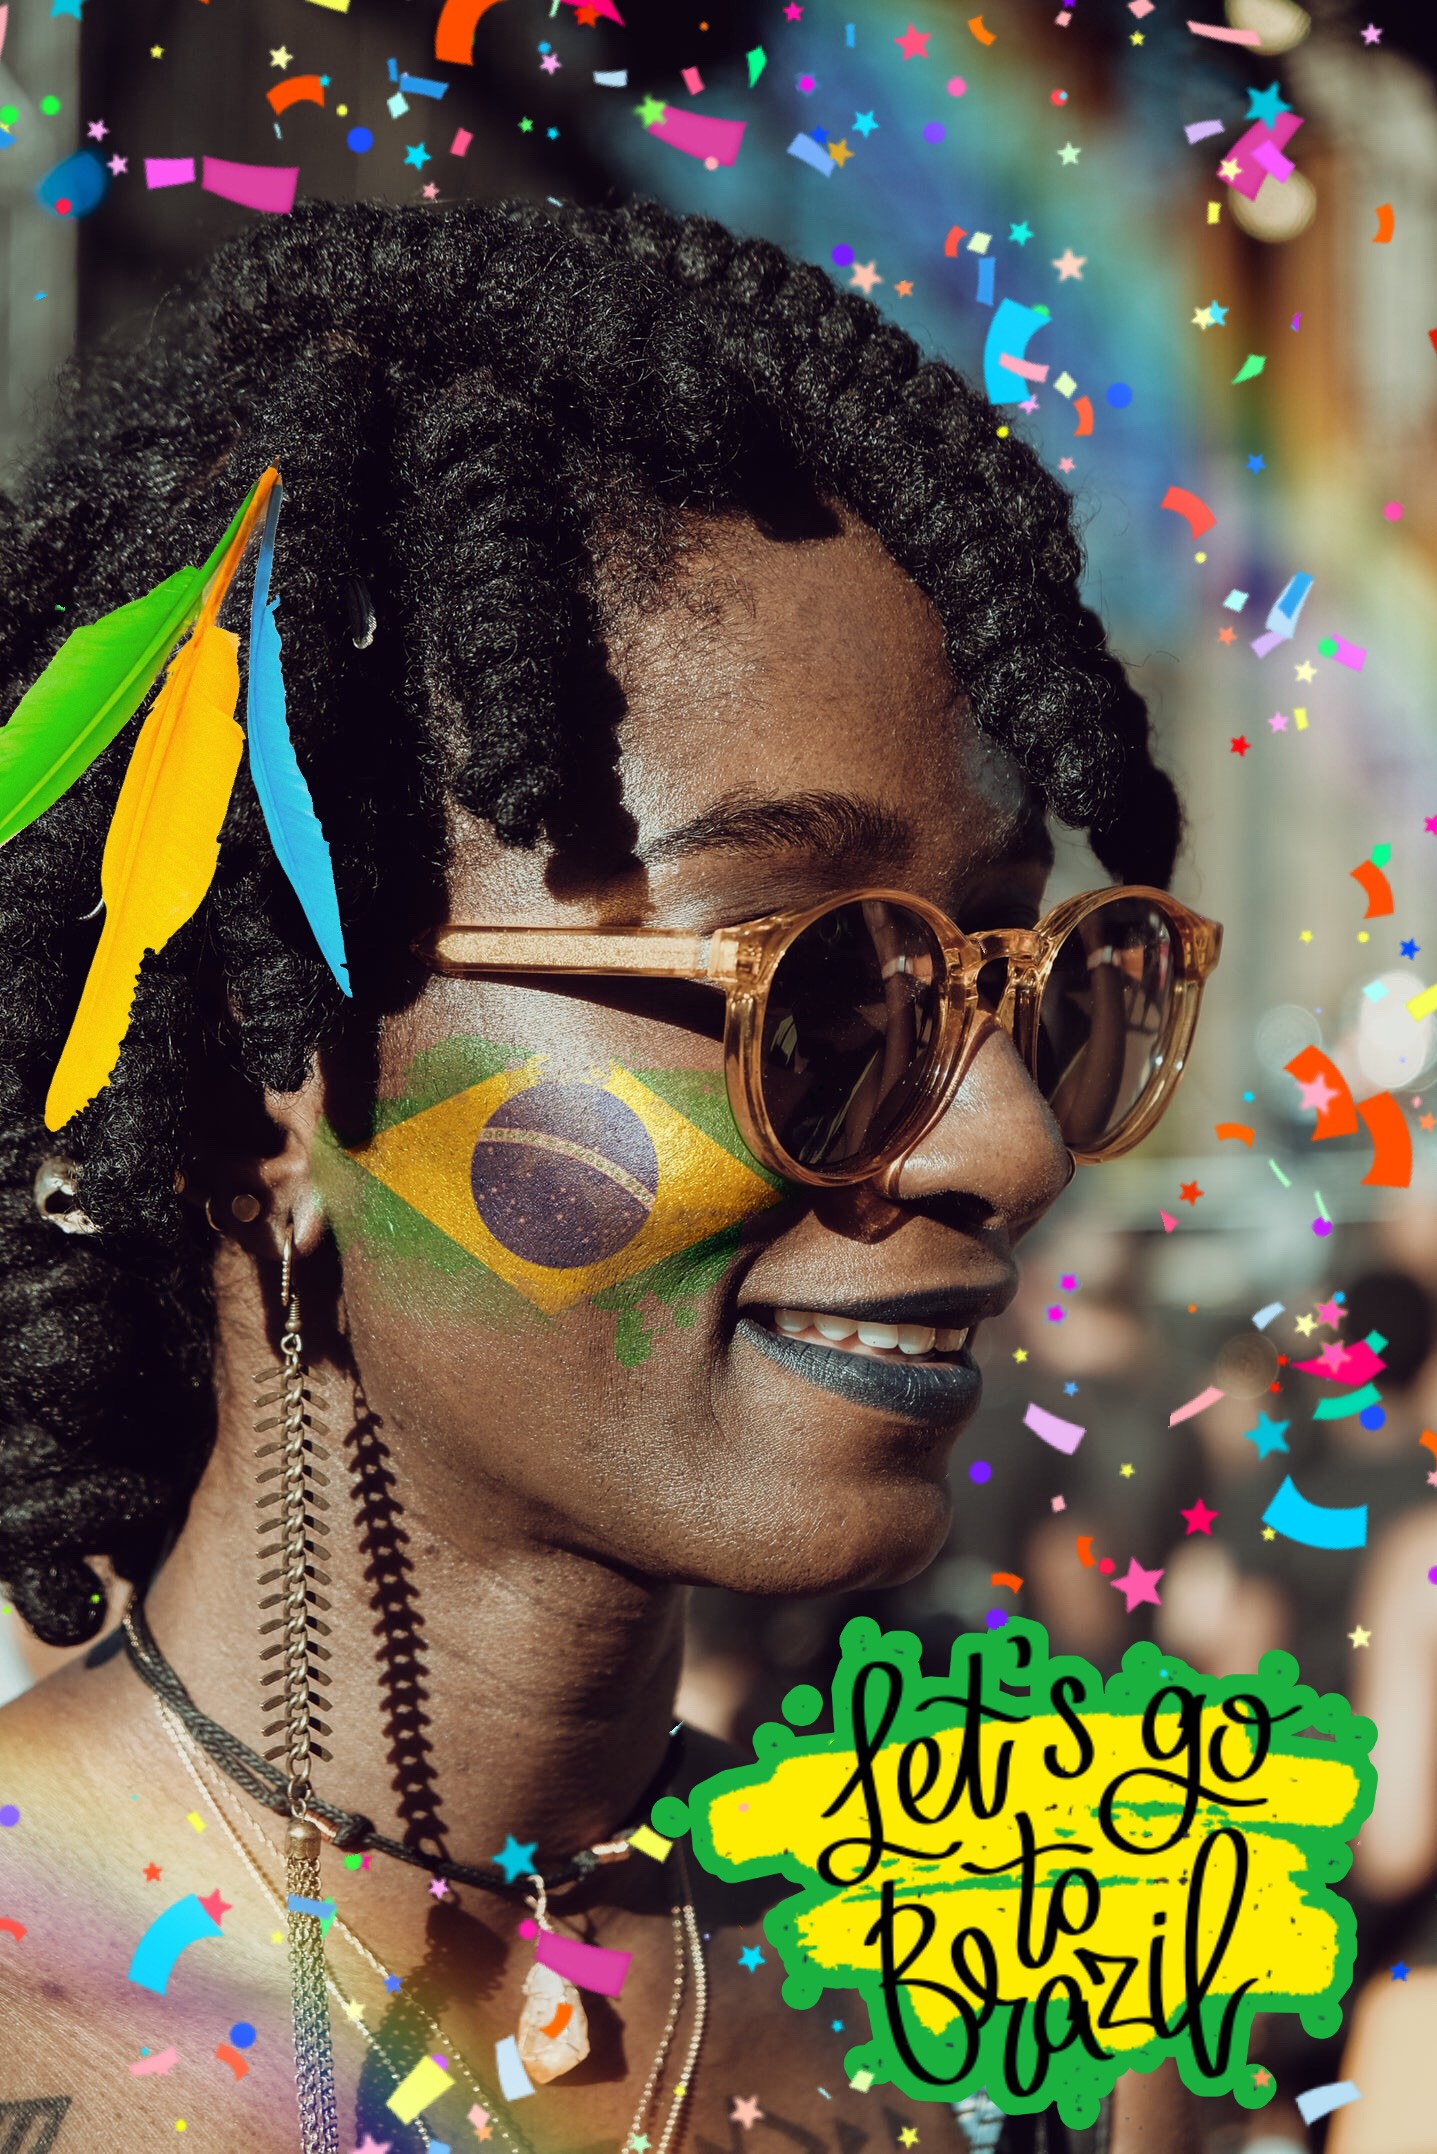 #freetoedit #remix #remixit #brasil #carnaval #rio #riodejaneiro #carnaval2018 #colors #view #confetti #flag #girl #skin #party #fun#eccarnavalofbrazil #c